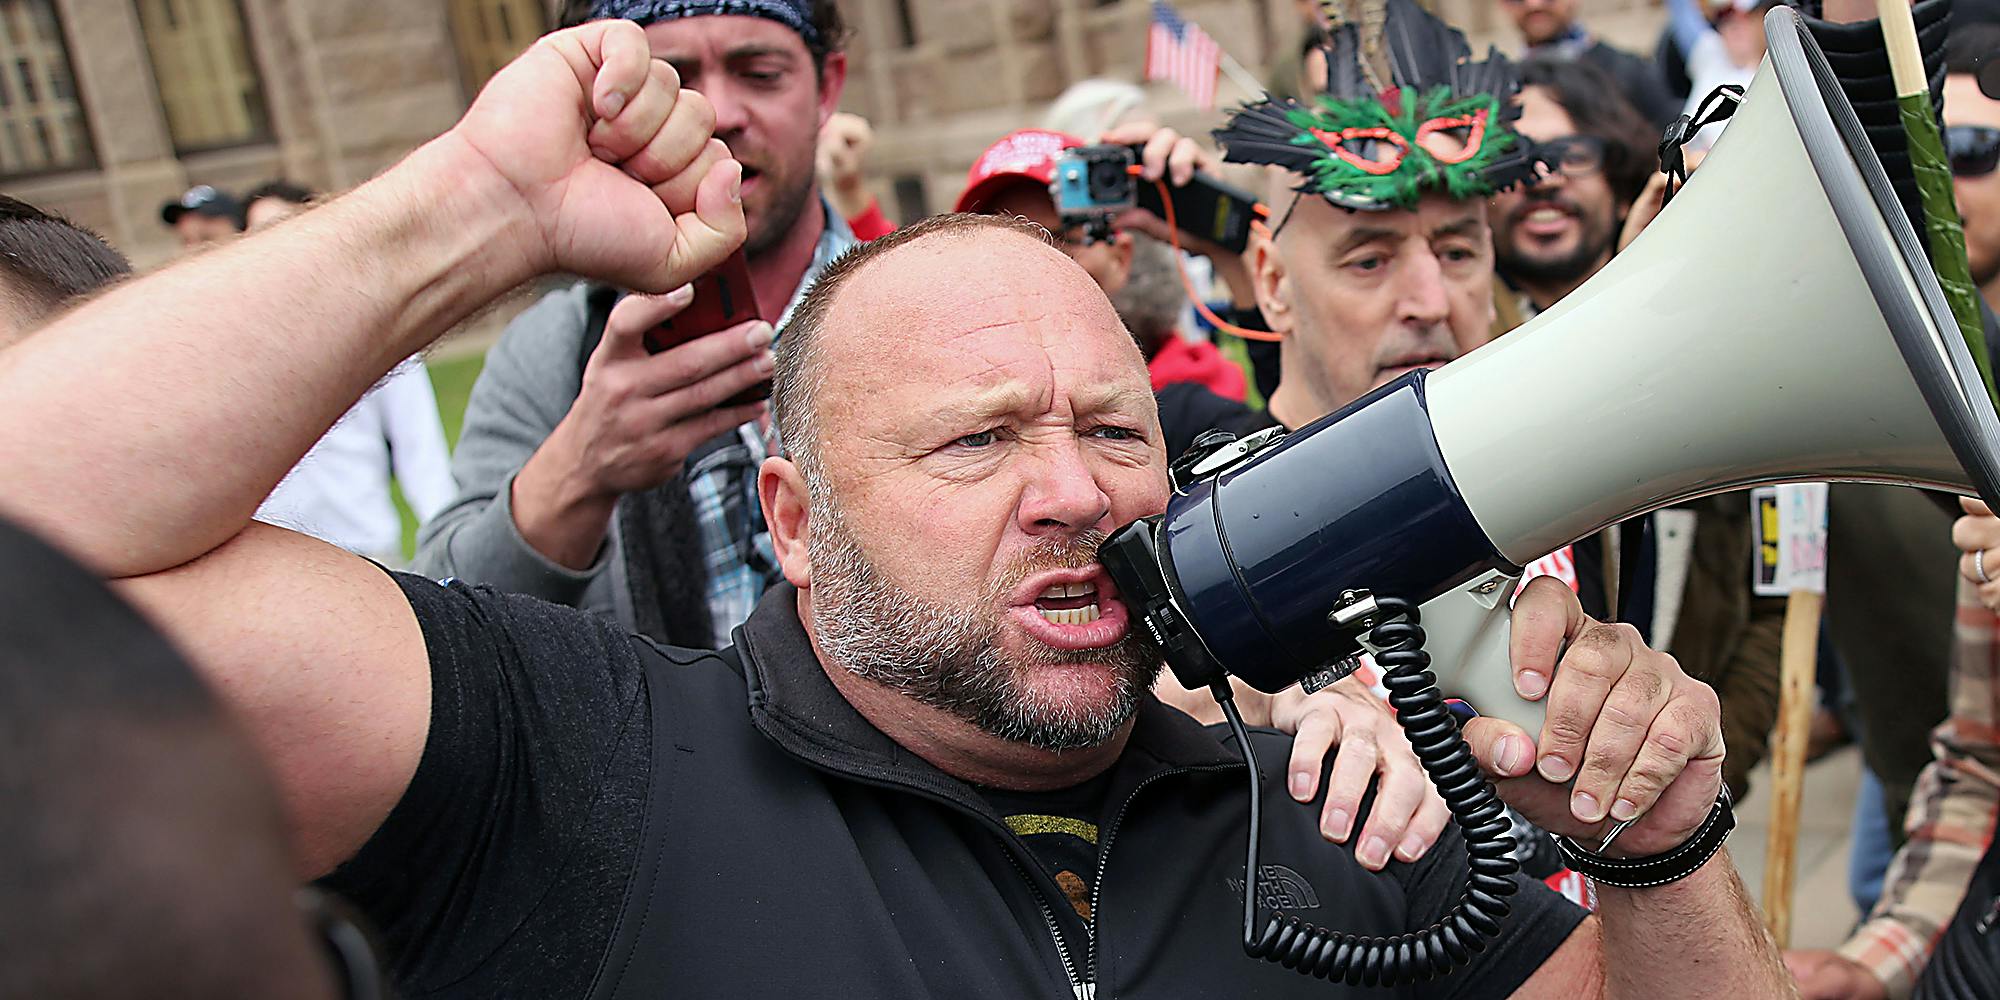 A man yelling into a megaphone.